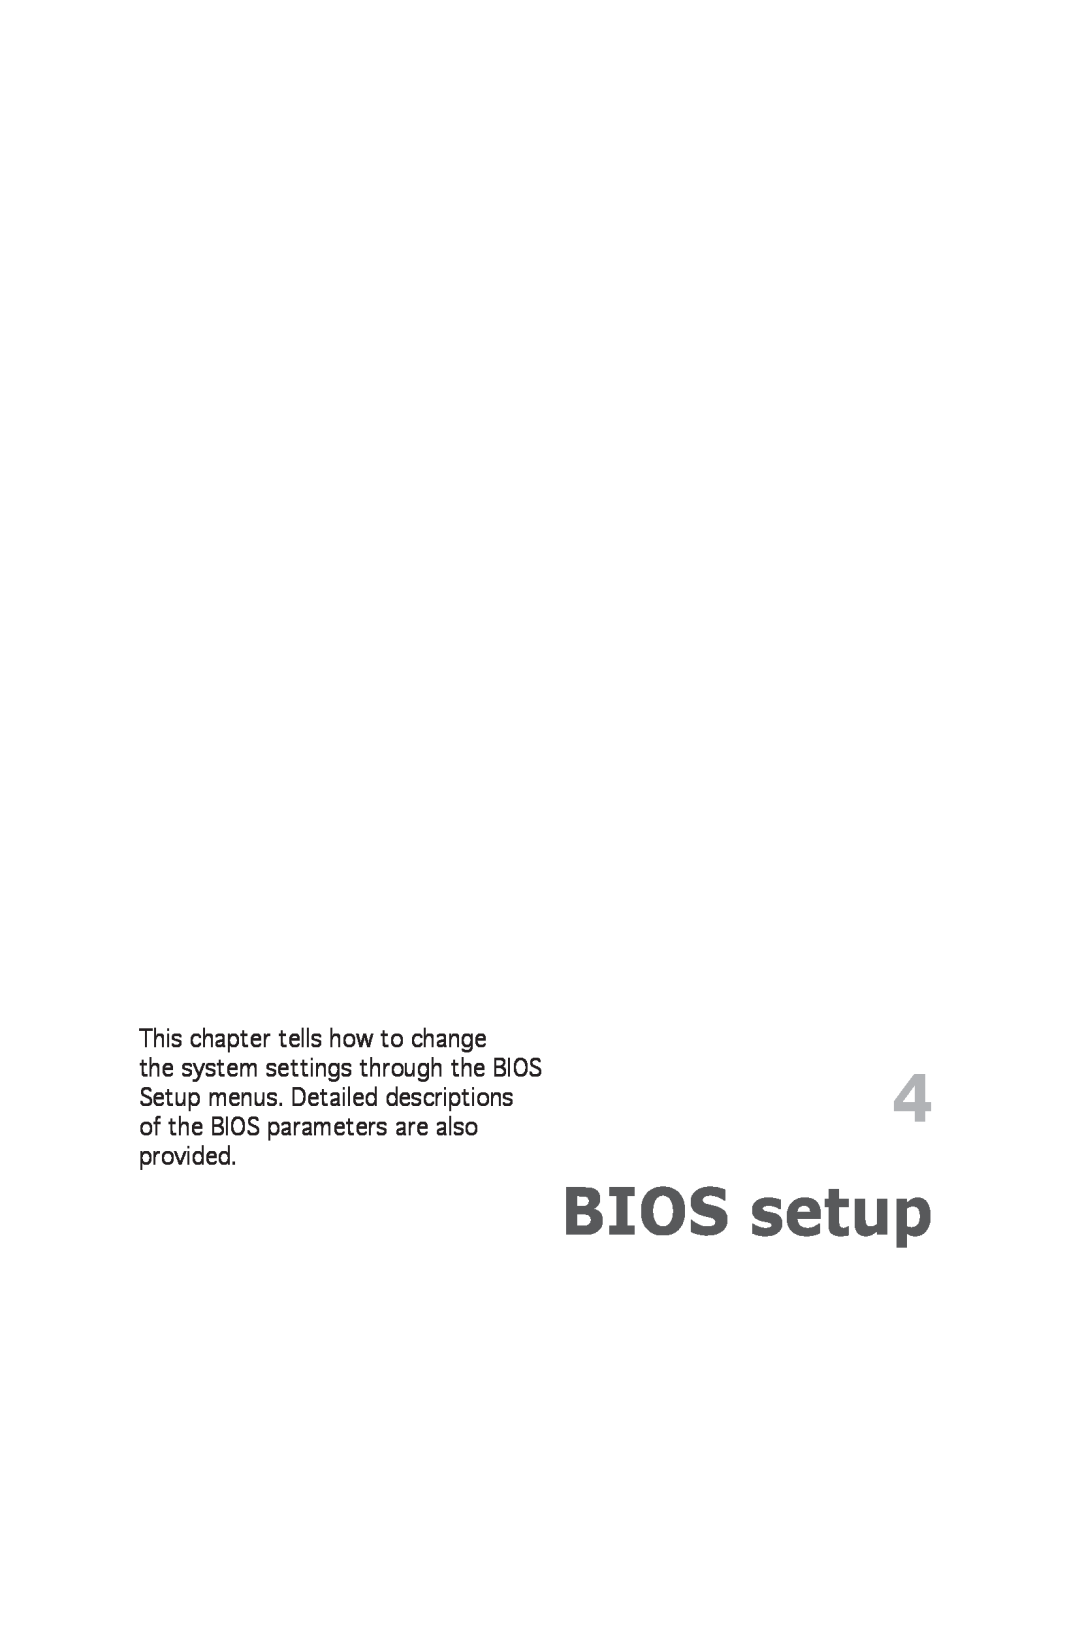 Asus A8N-SLI SE manual BIOS setup, This chapter tells how to change 